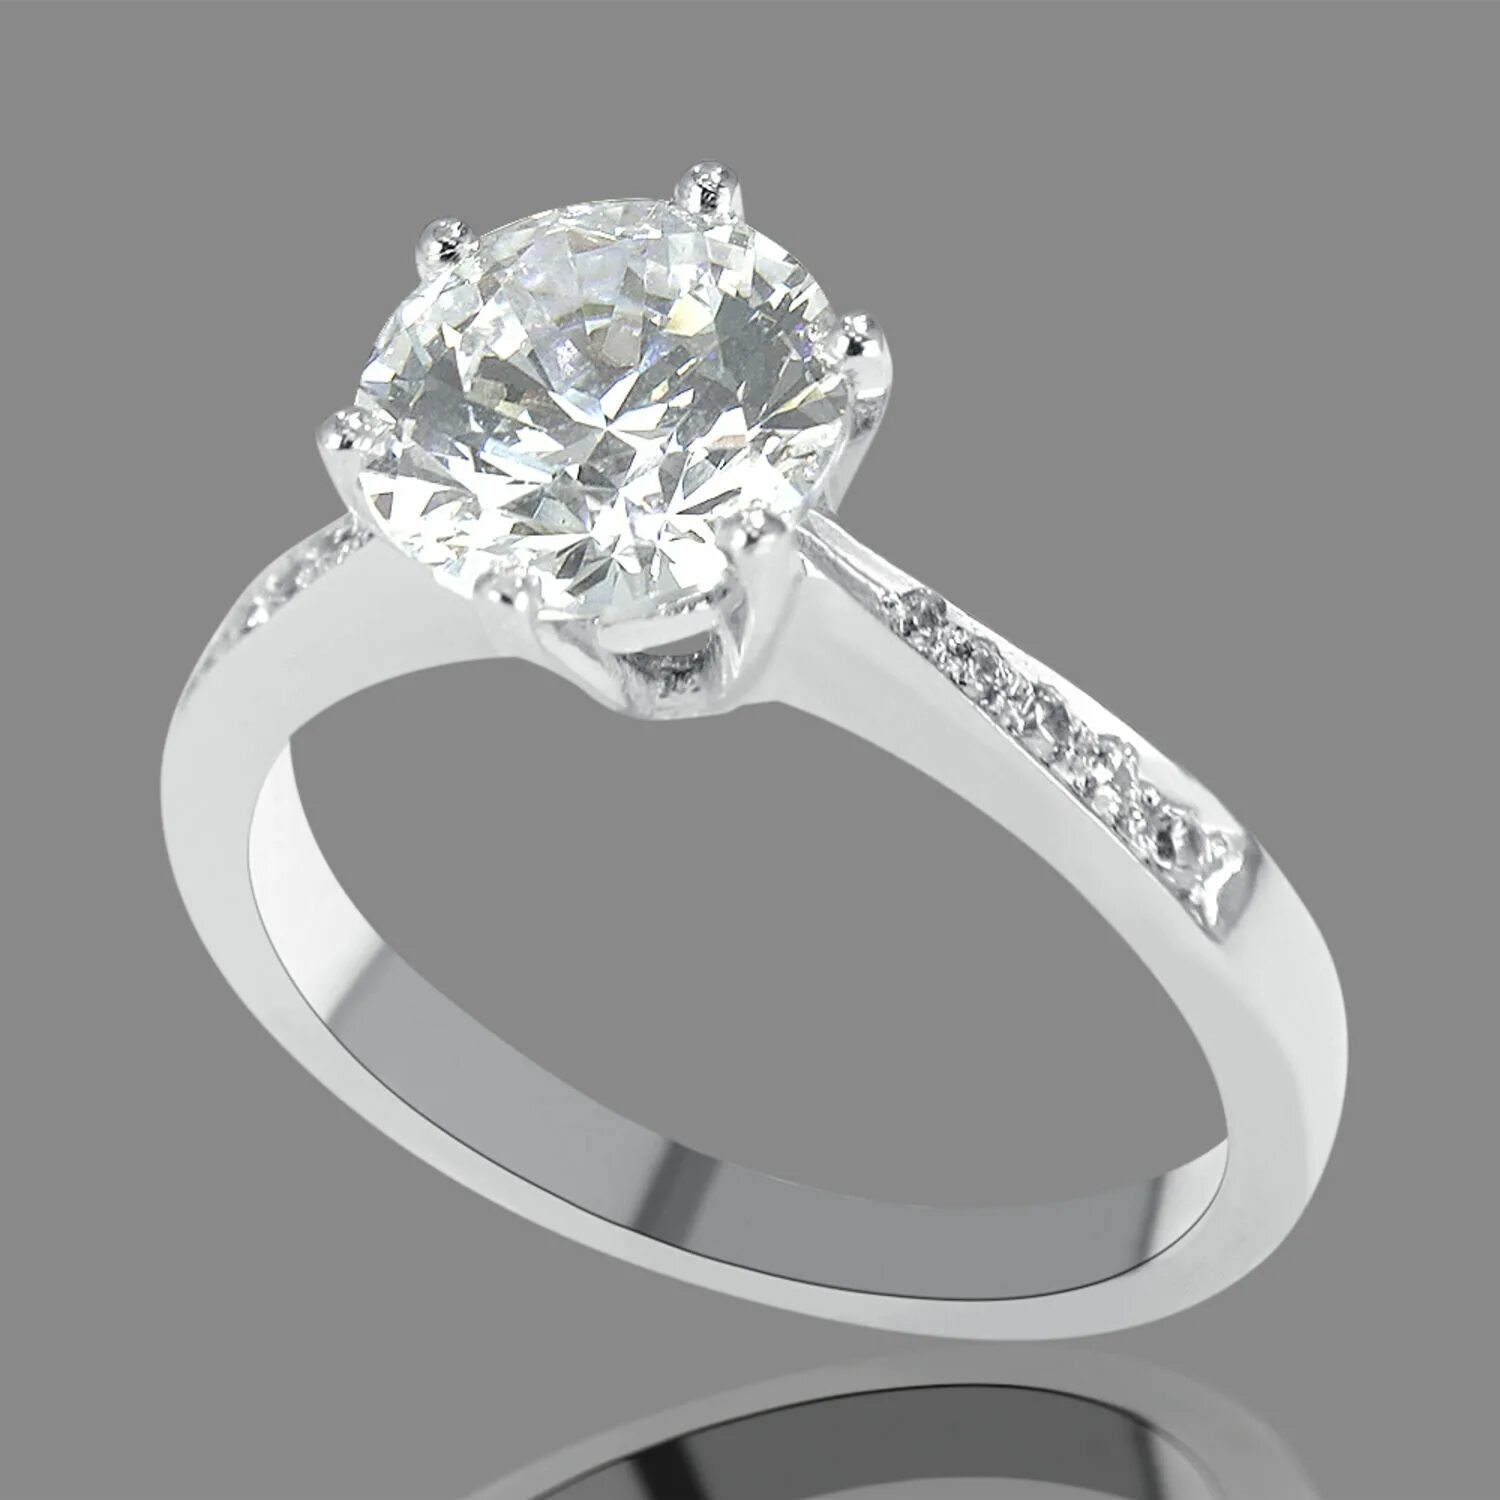 Карат белое. 0490-K5r-02 кольцо с бриллиантами. Кольцо Графф с бриллиантом 10 карат. Кольцо с бриллиантами r01-1851359axd-r17. Обручальное кольцо с бриллиантом 1 карат.